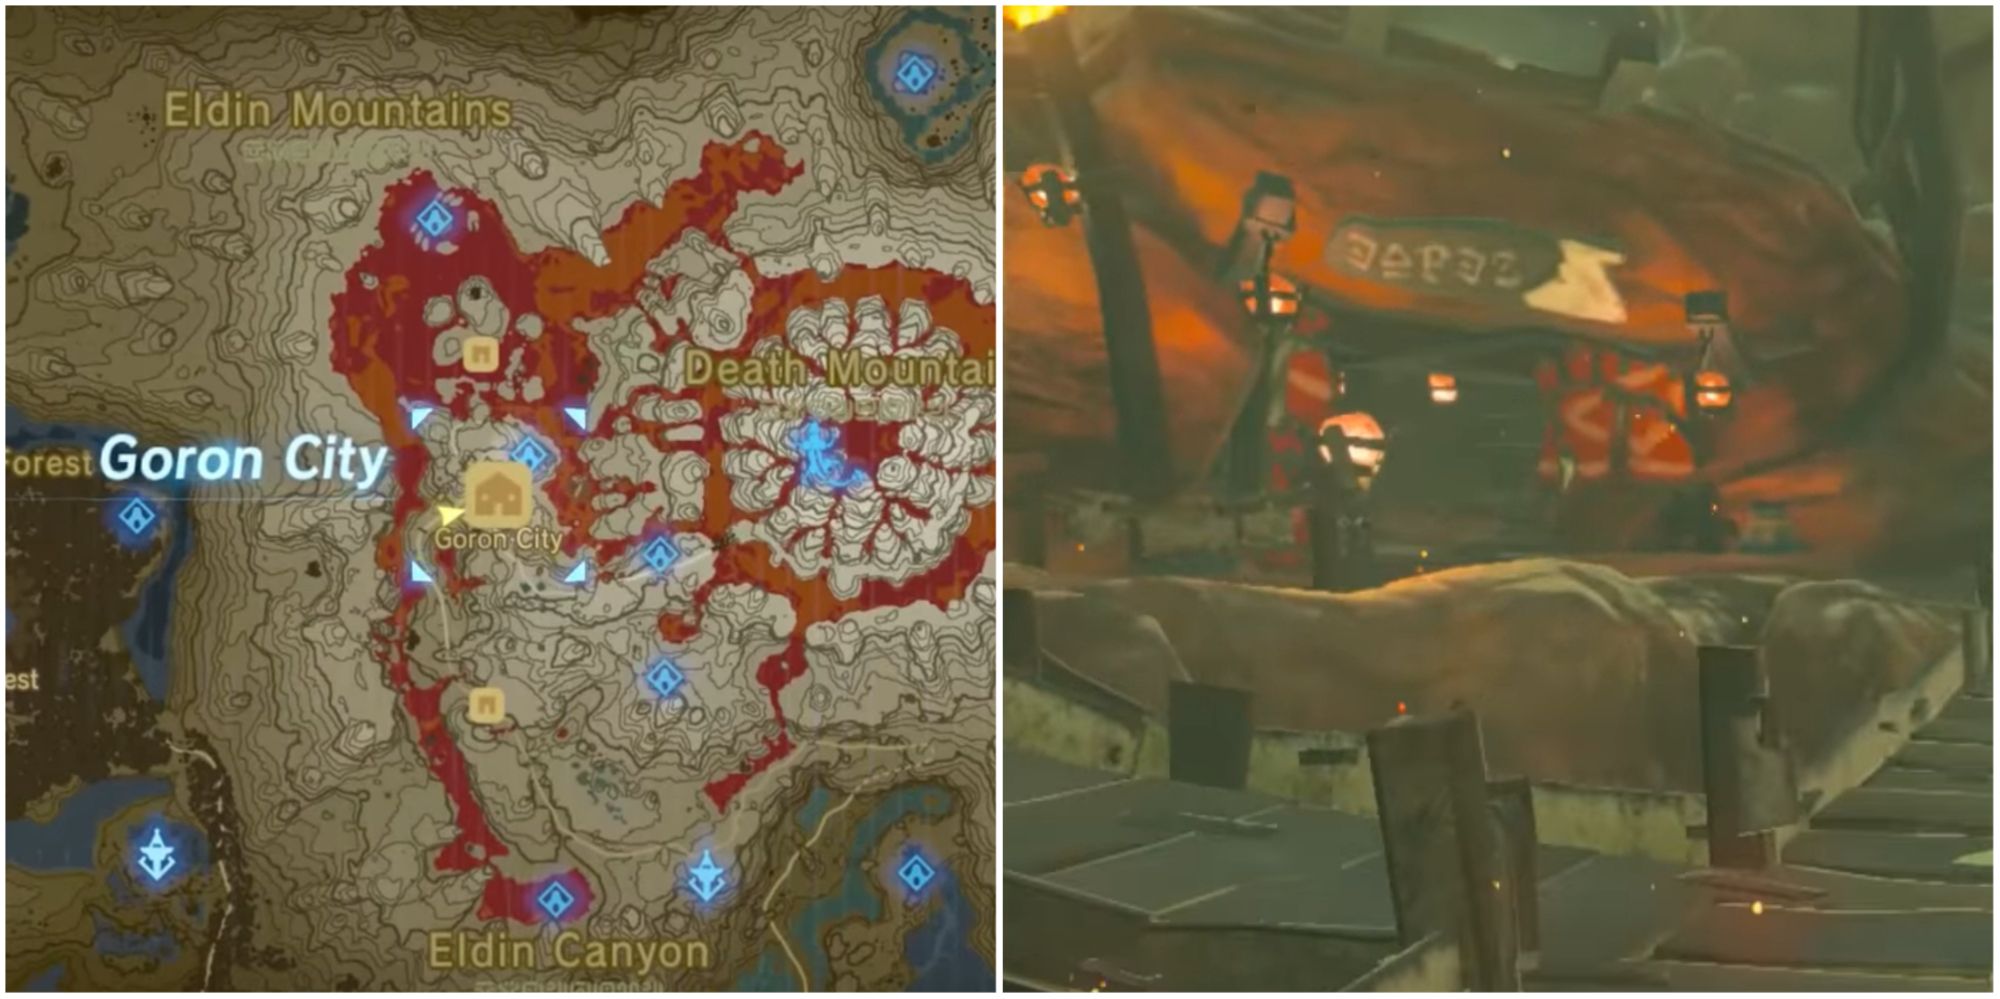 Legend Of Zelda Breath Of The Wild Split Image Showing Goron City Location